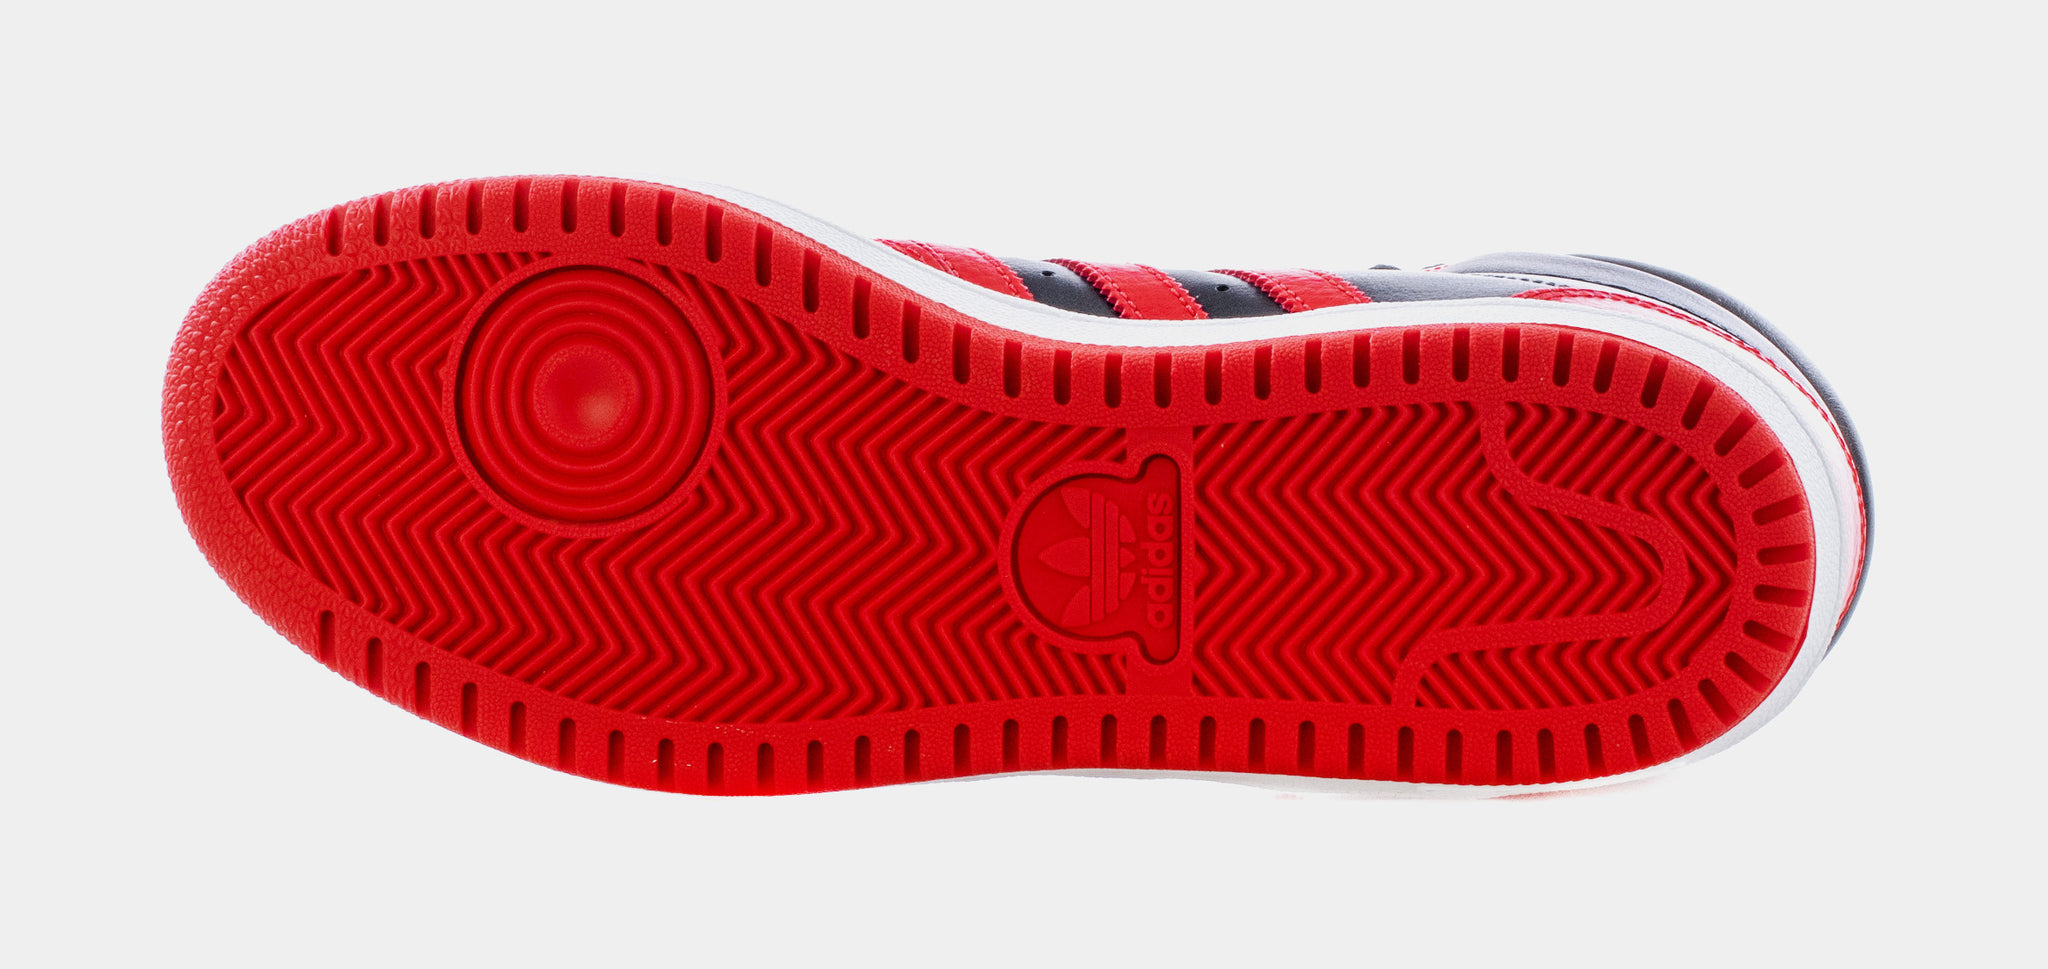 adidas Top Ten Hi Mens Basketball Shoes Black Red GX0756 – Shoe Palace